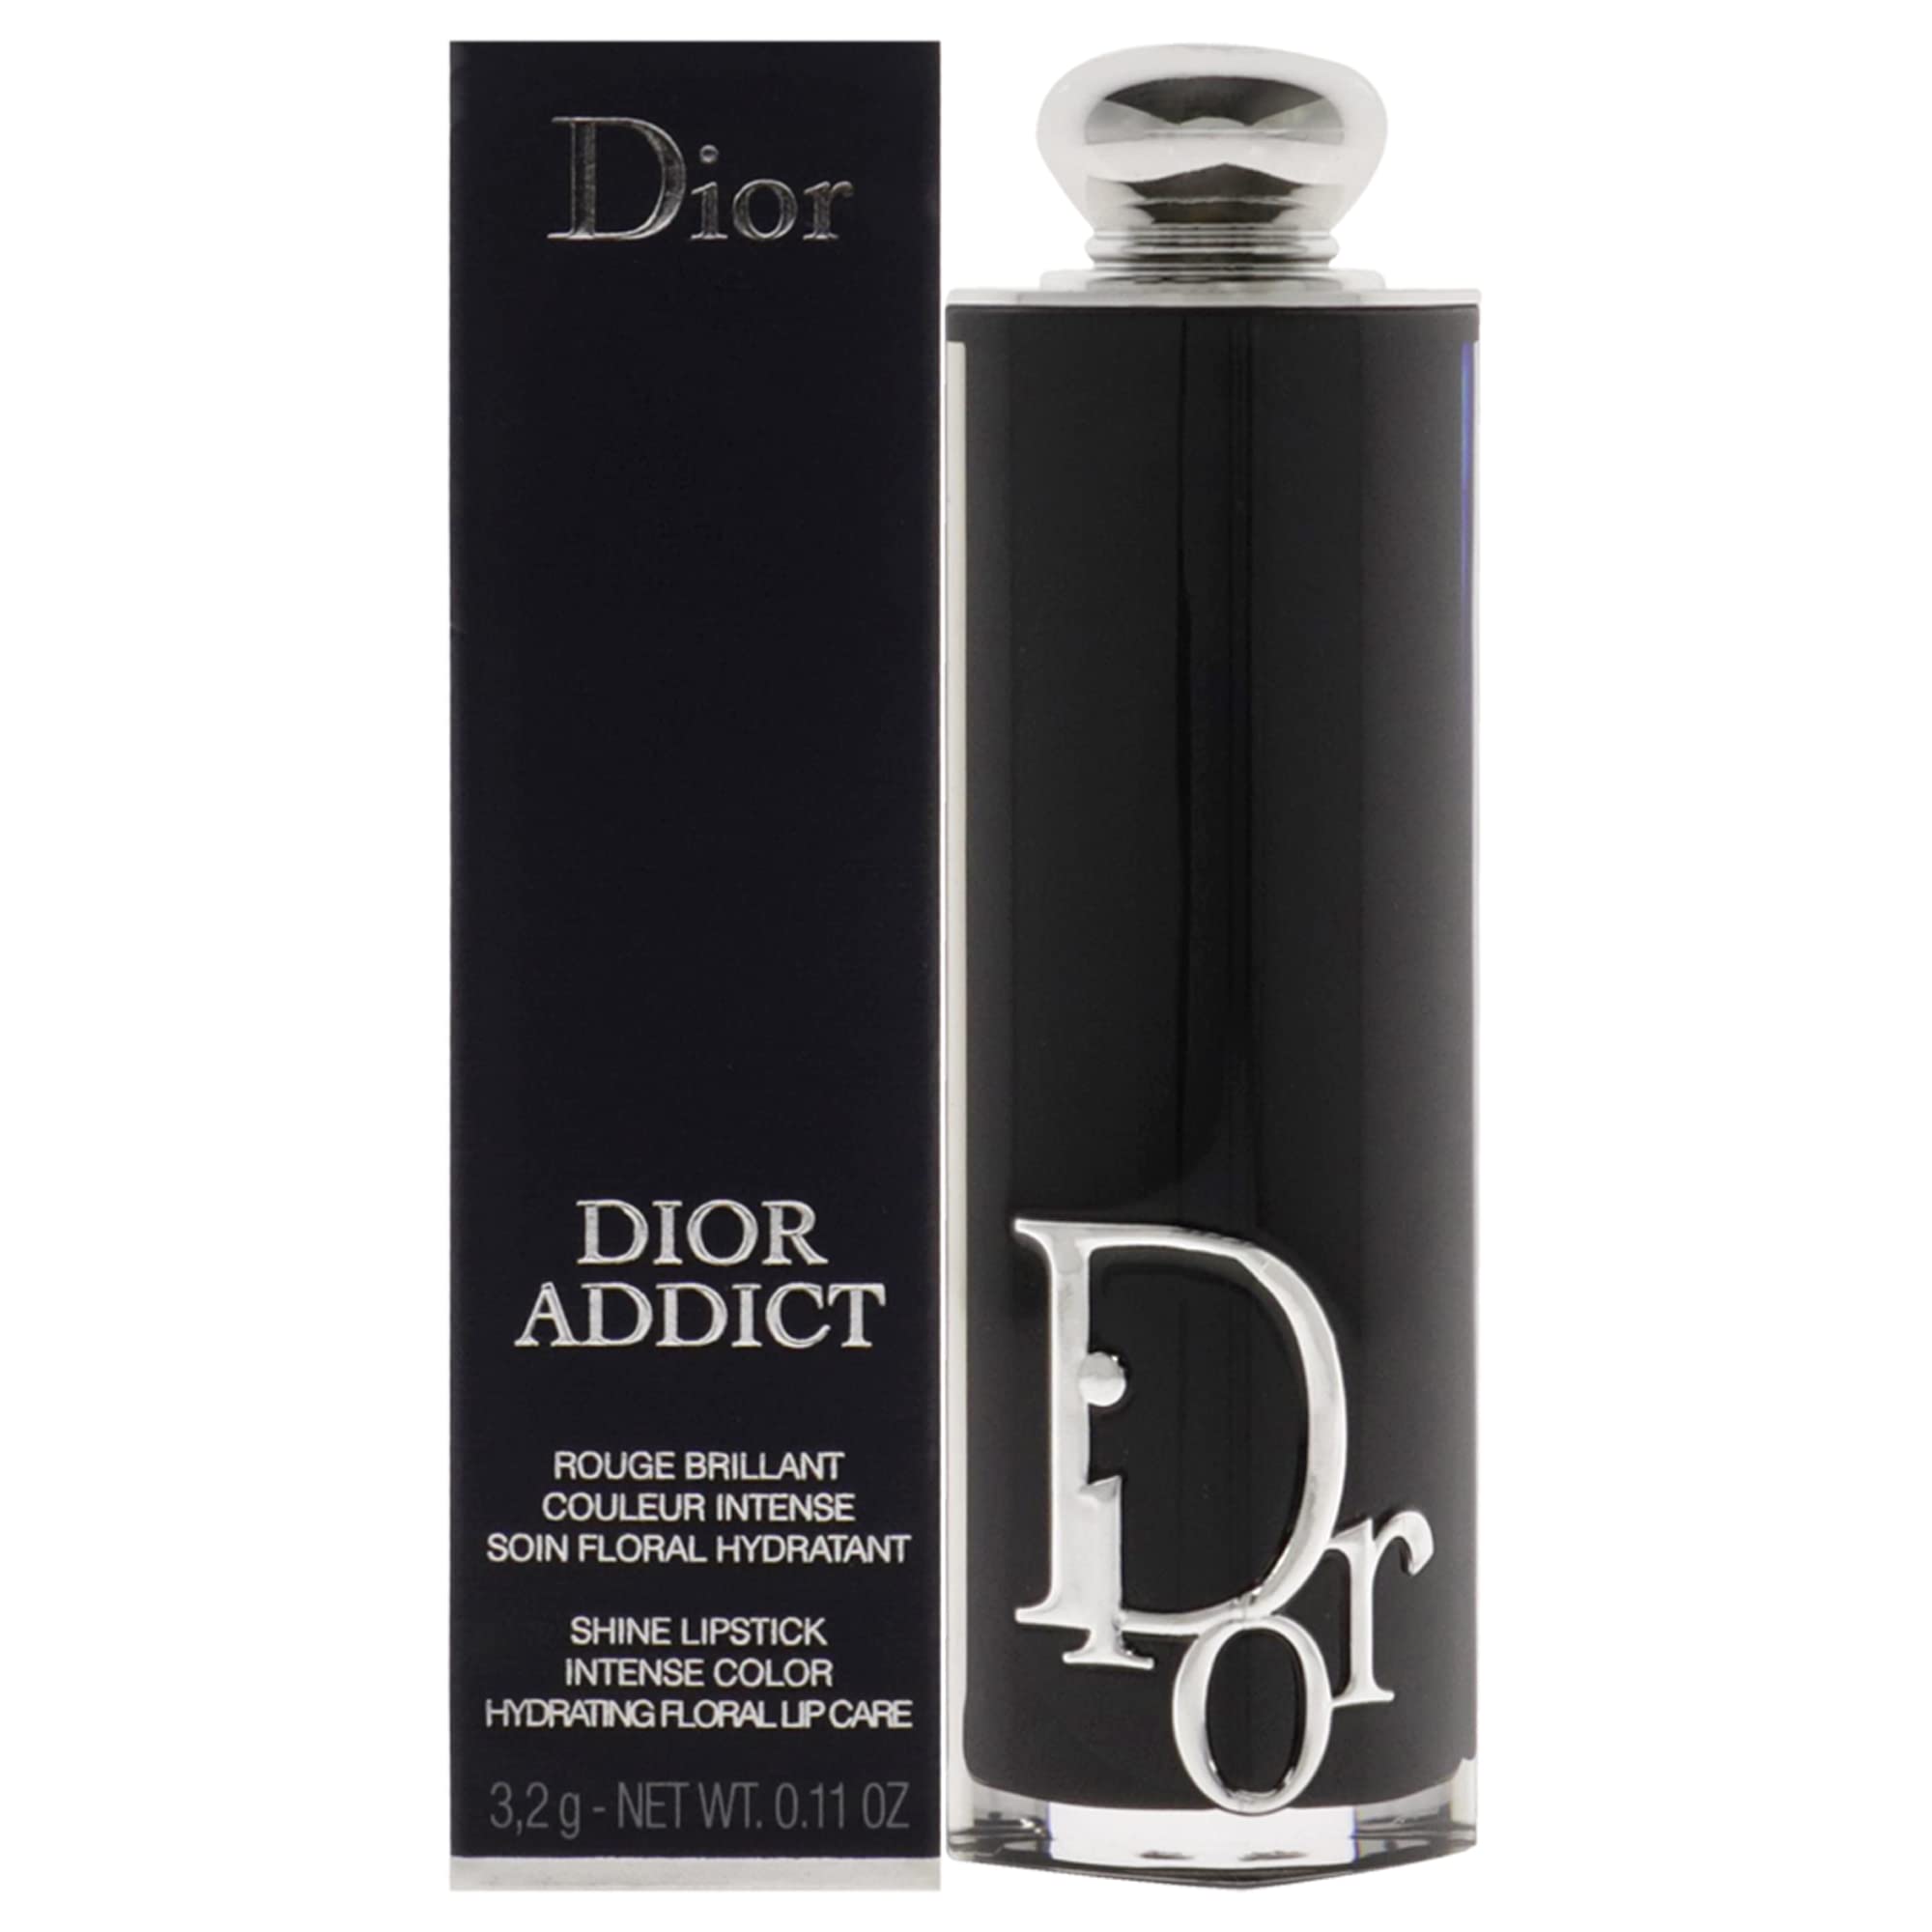 Sneak Peek Dior Addict Refillable Shine Lipstick New Makeup Release   YouTube